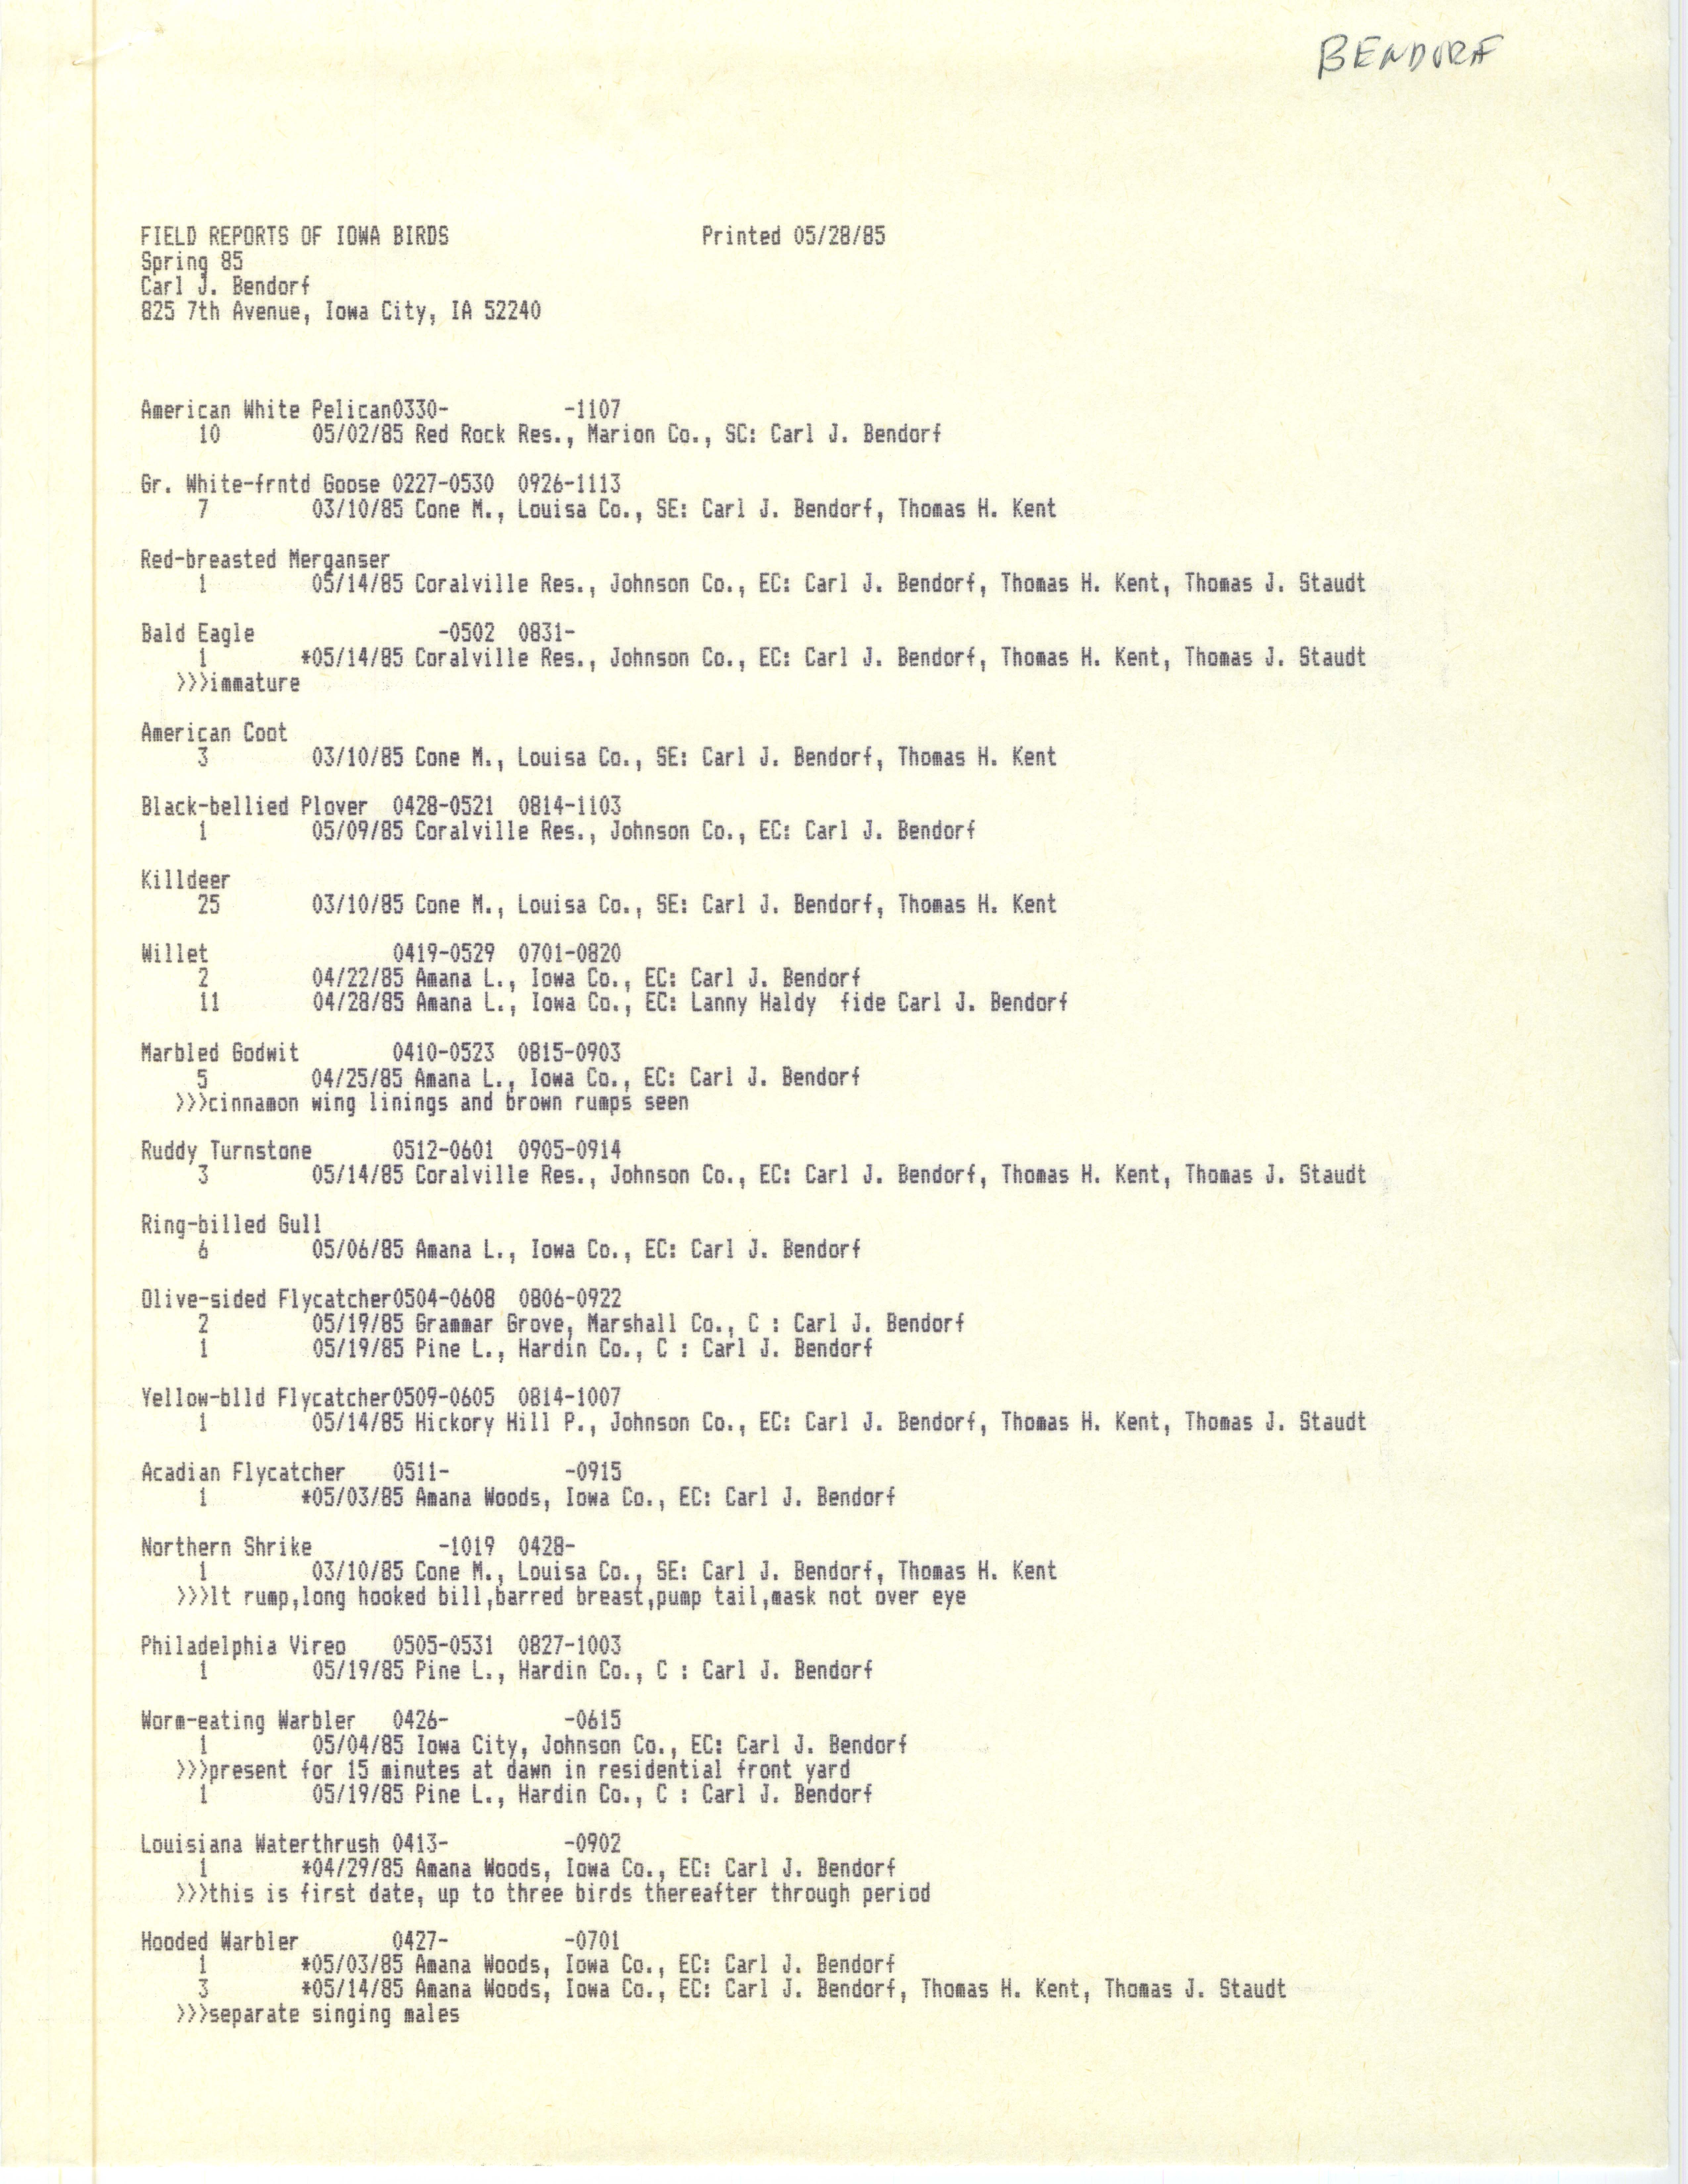 Field reports of Iowa birds, May 28, 1985